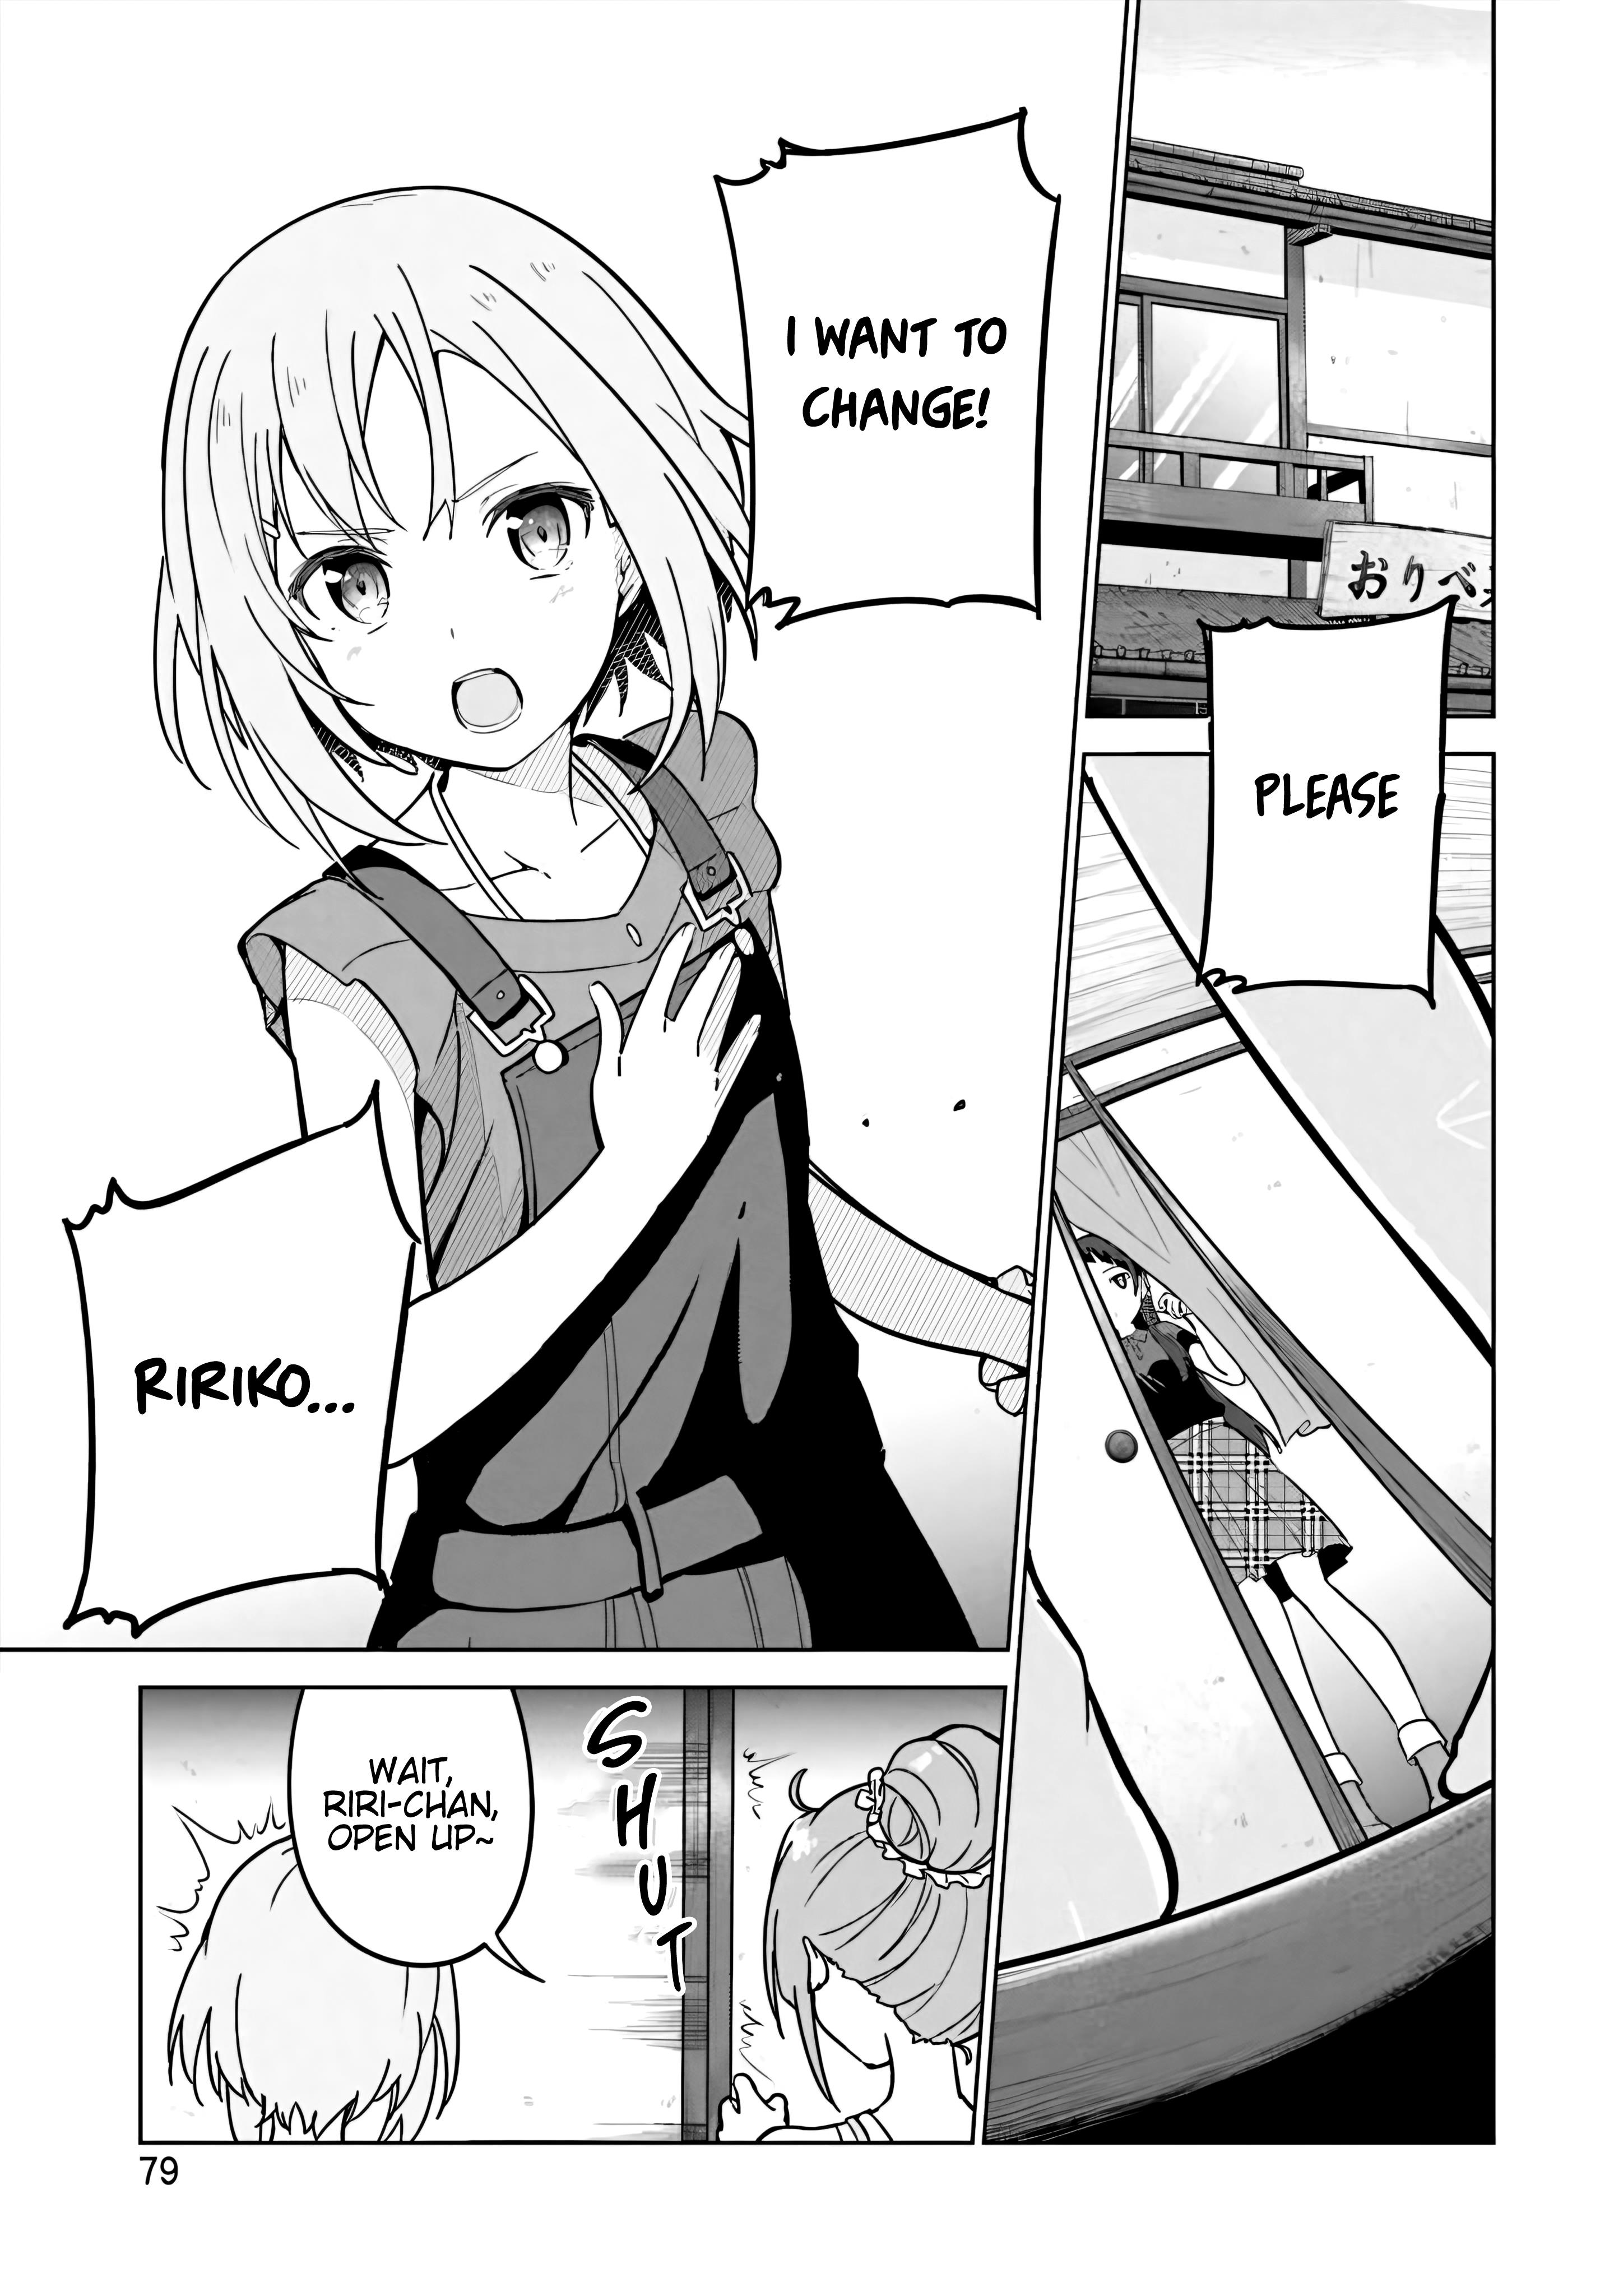 Sakura Quest Side Story: Ririko Oribe's Daily Report Vol 1 Chapter 6 #1